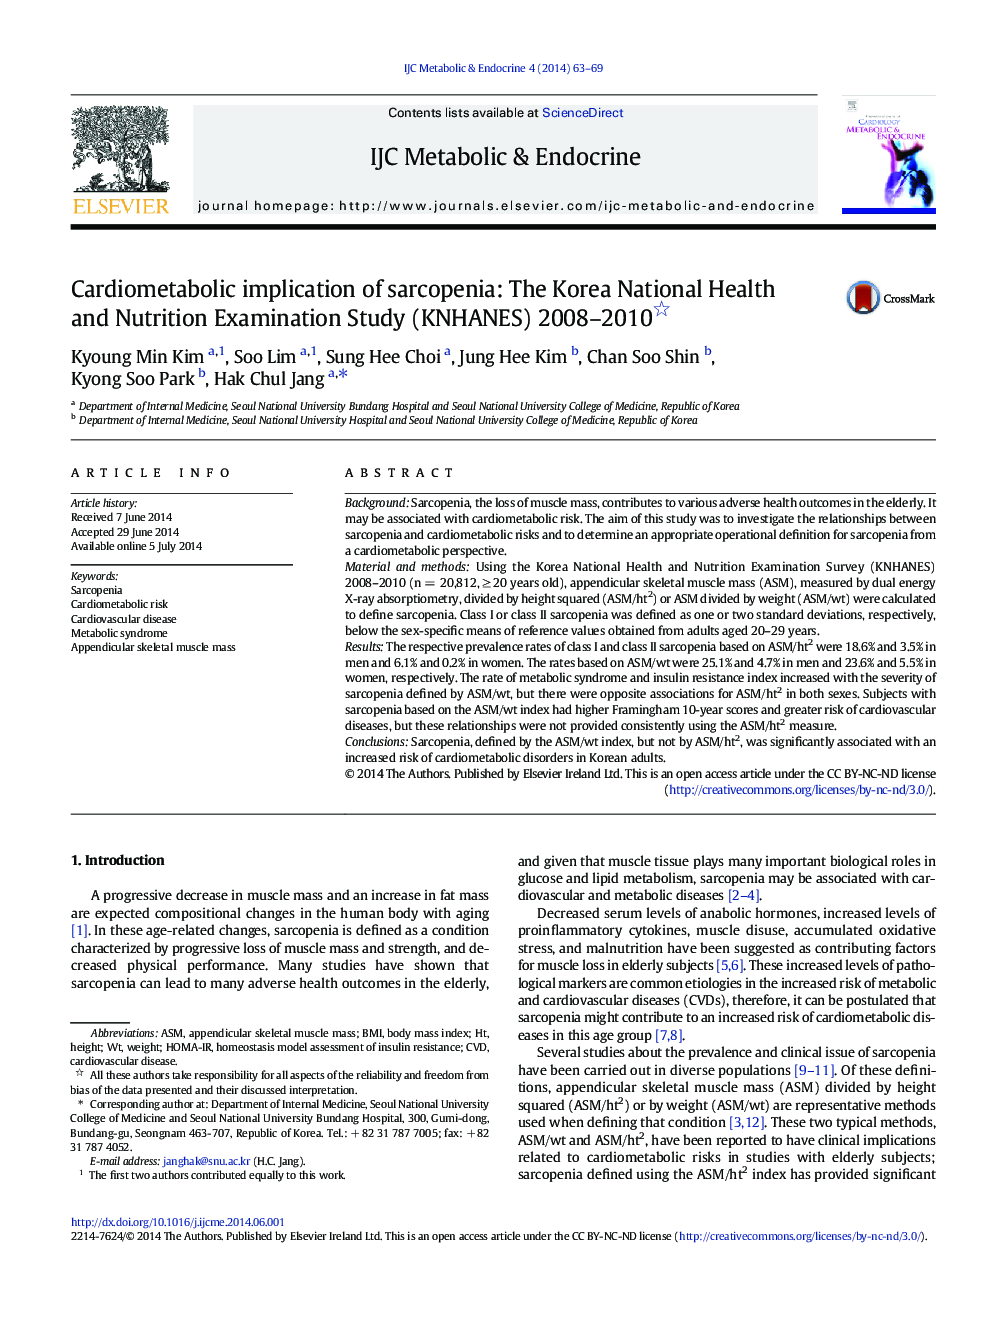 Cardiometabolic implication of sarcopenia: The Korea National Health and Nutrition Examination Study (KNHANES) 2008–2010 